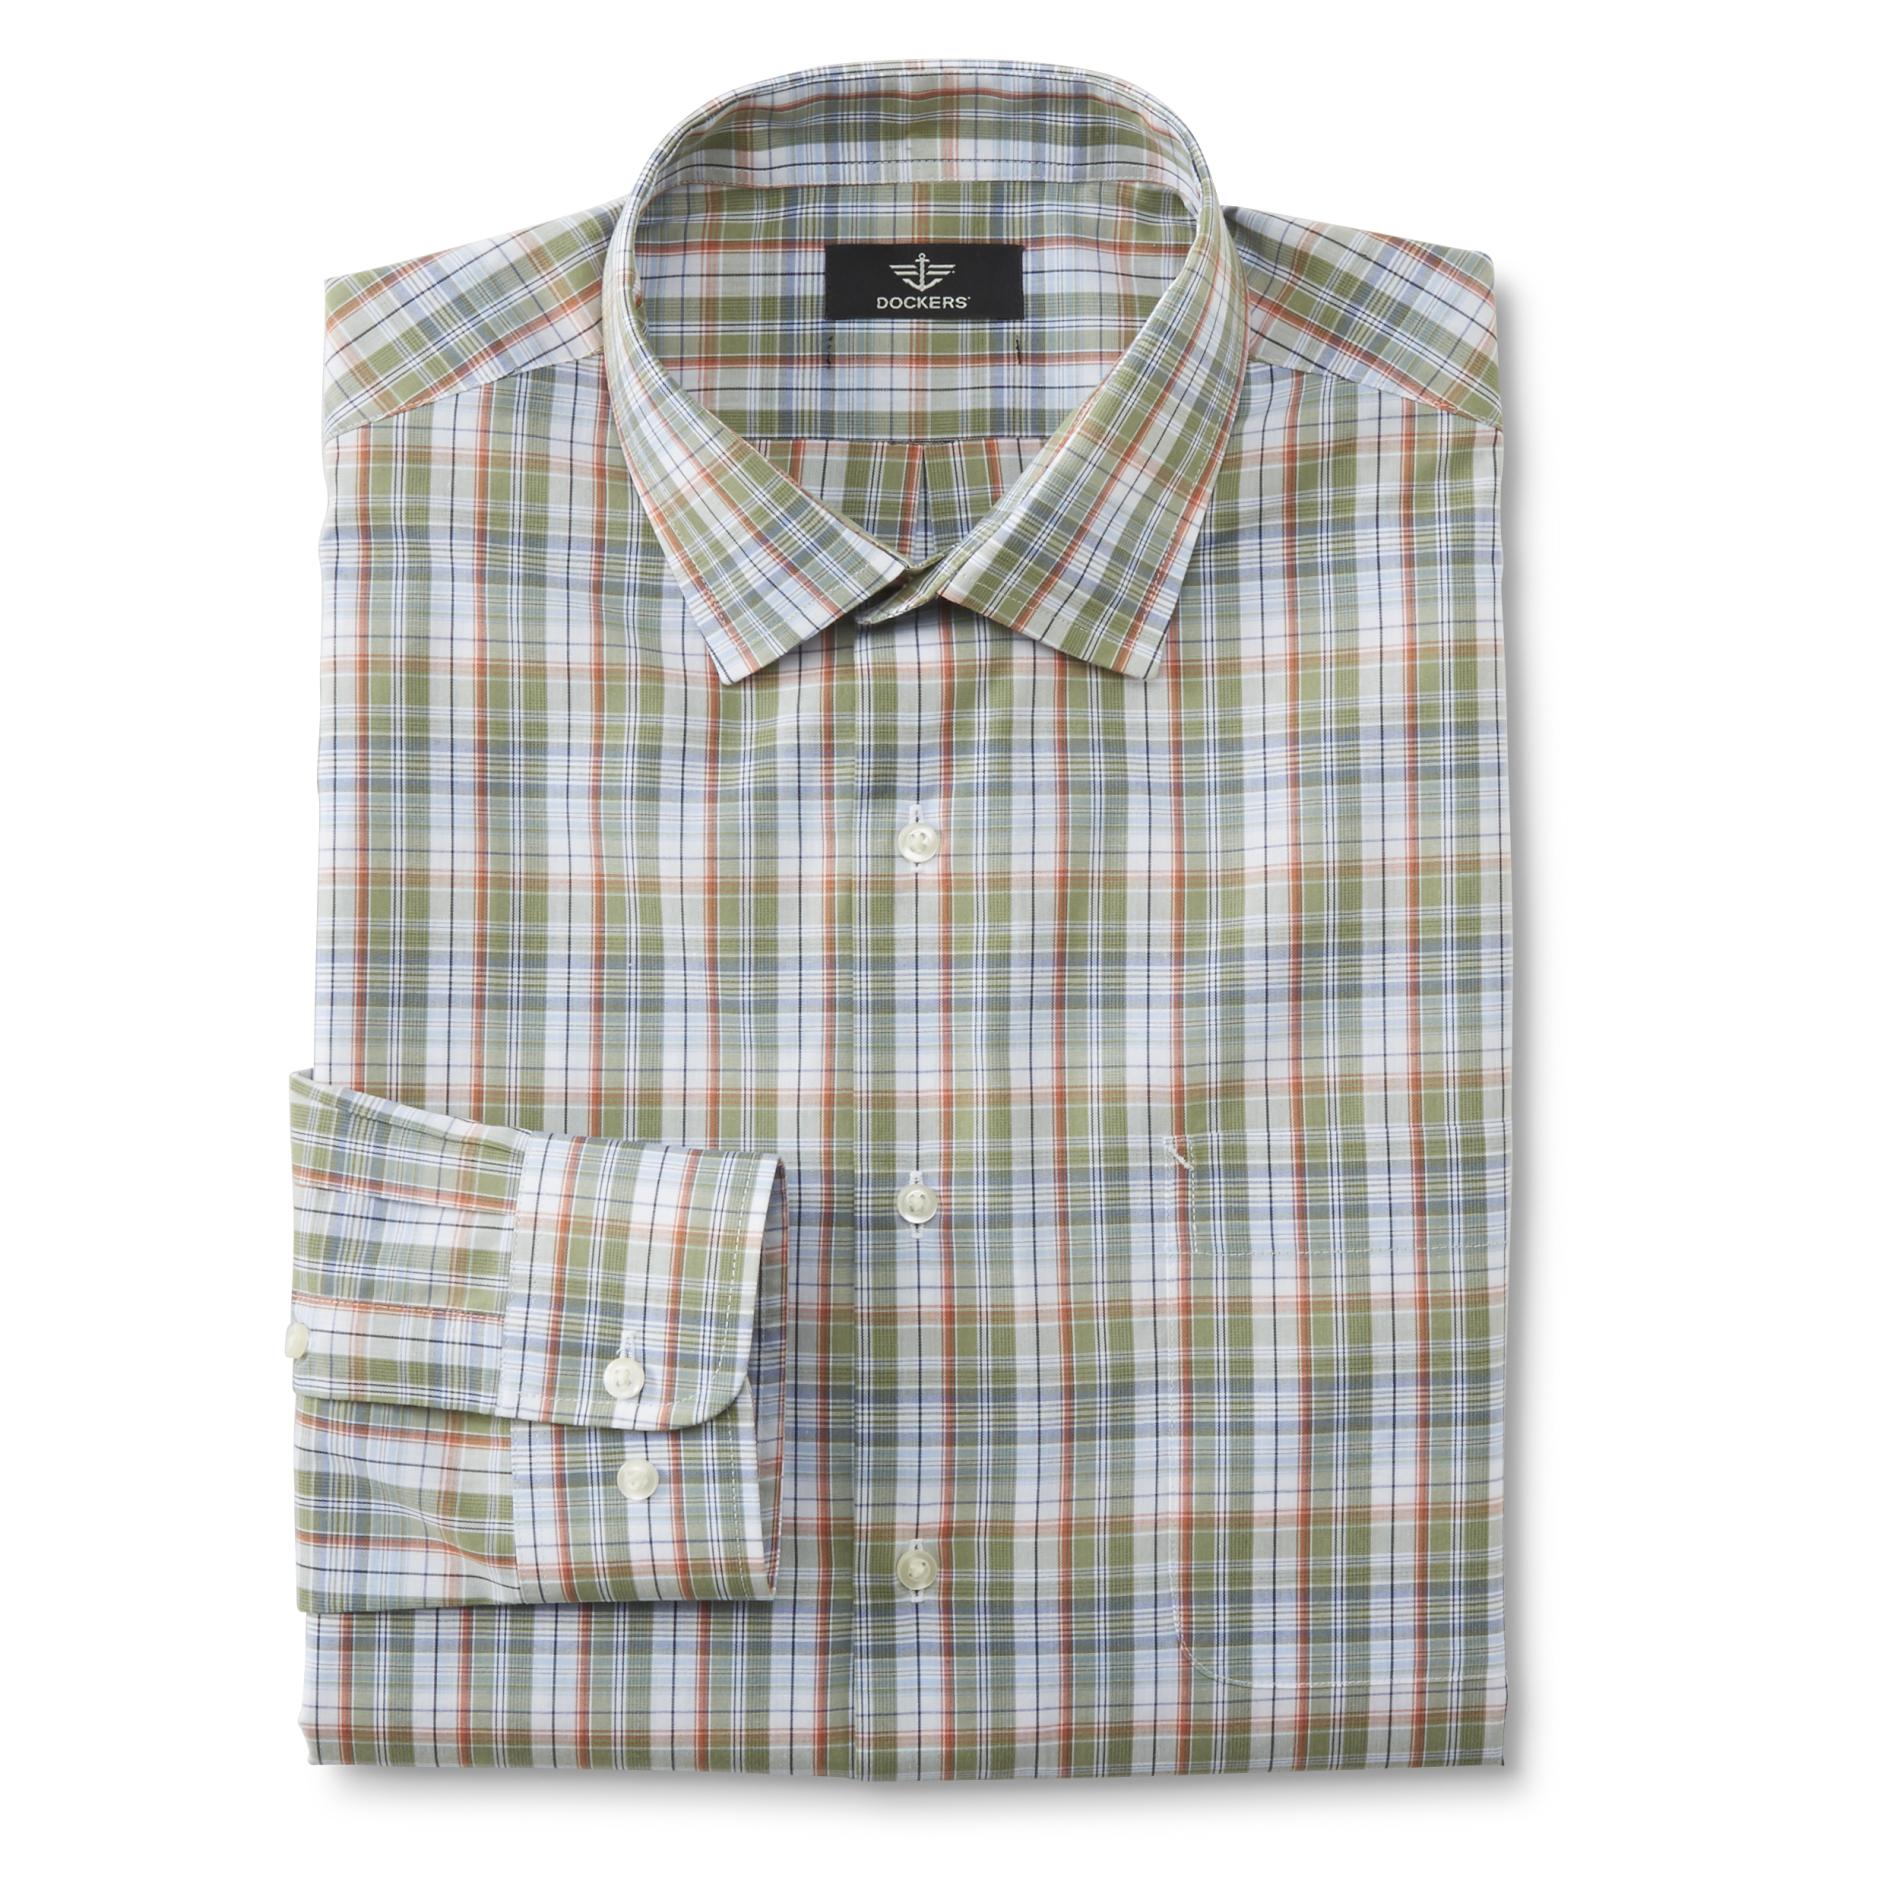 Dockers Men's Classic Fit Dress Shirt - Plaid